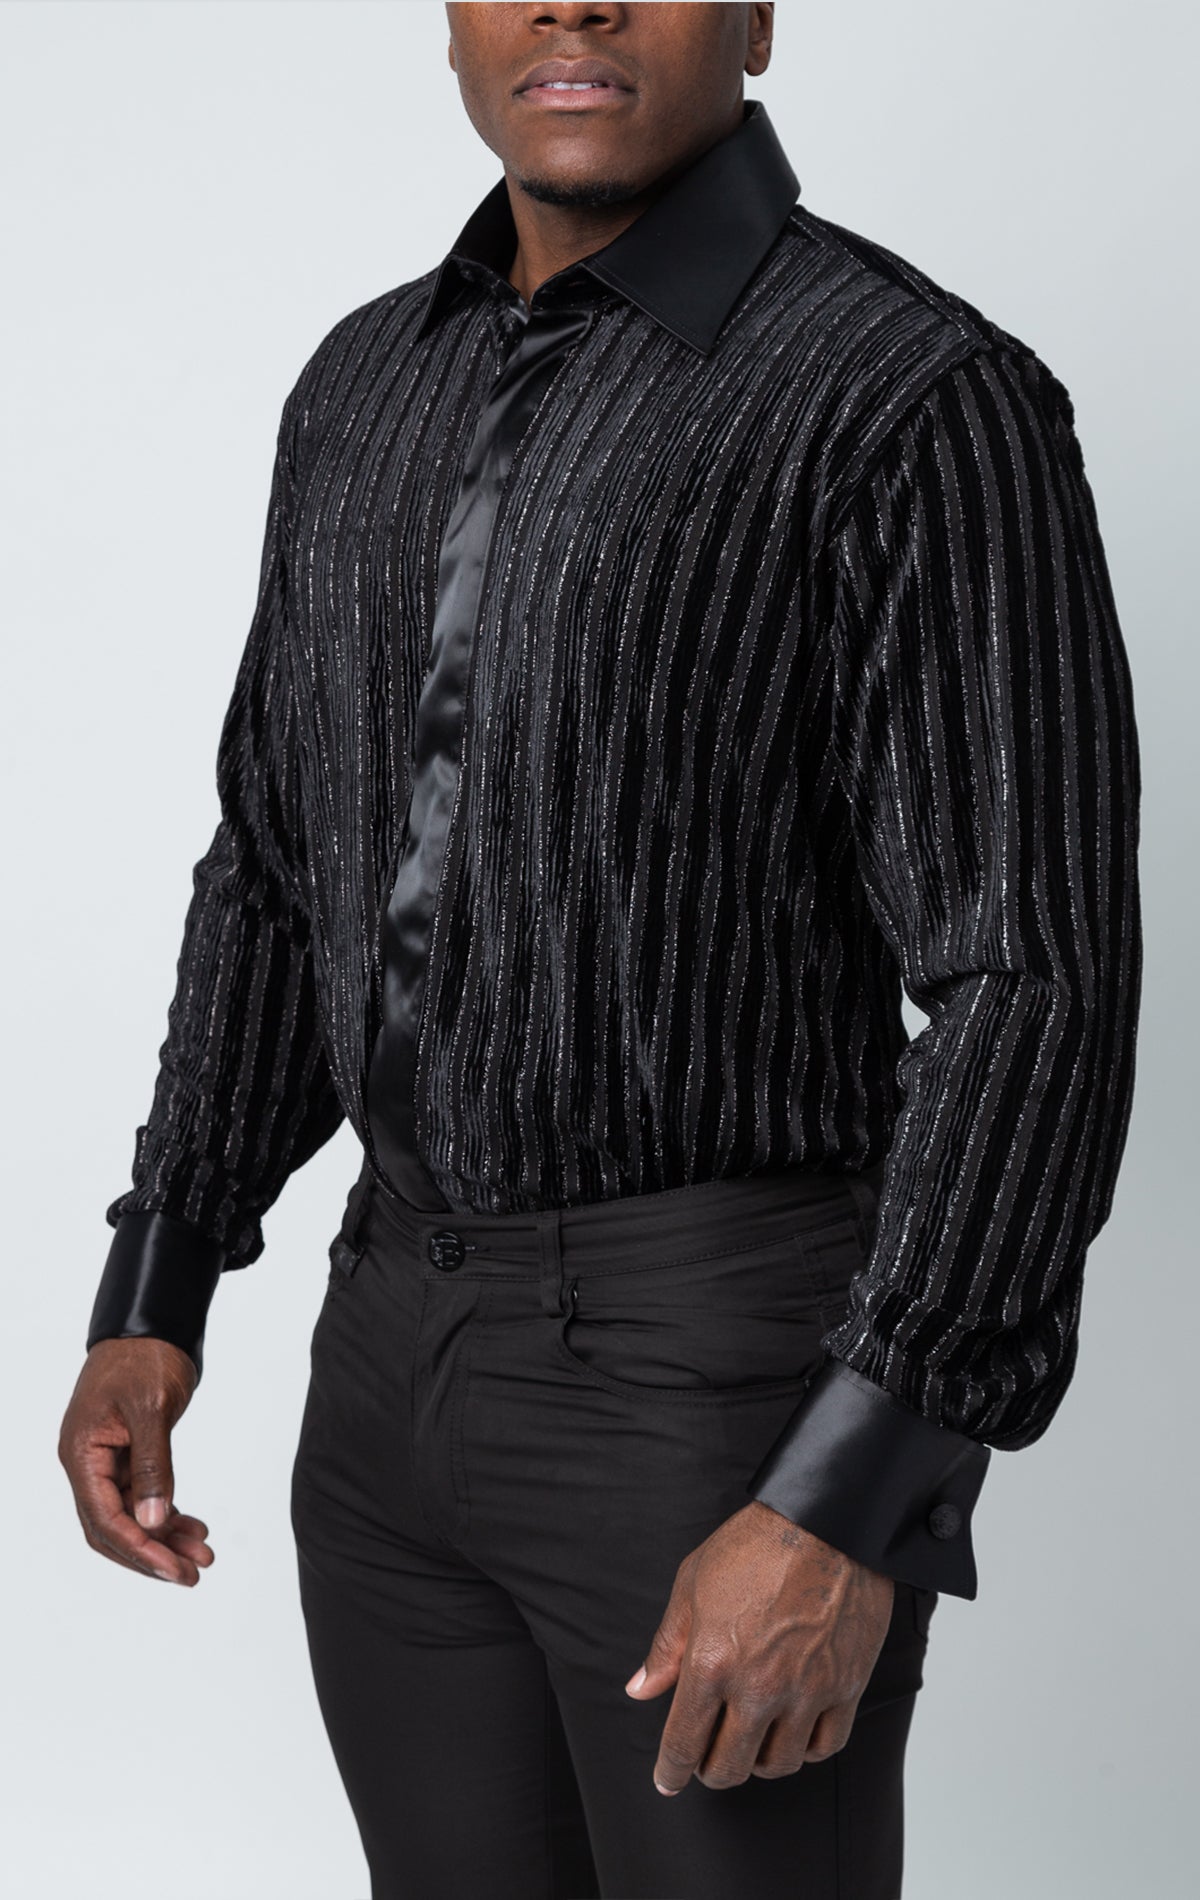 Button up, long sleeve black shirt